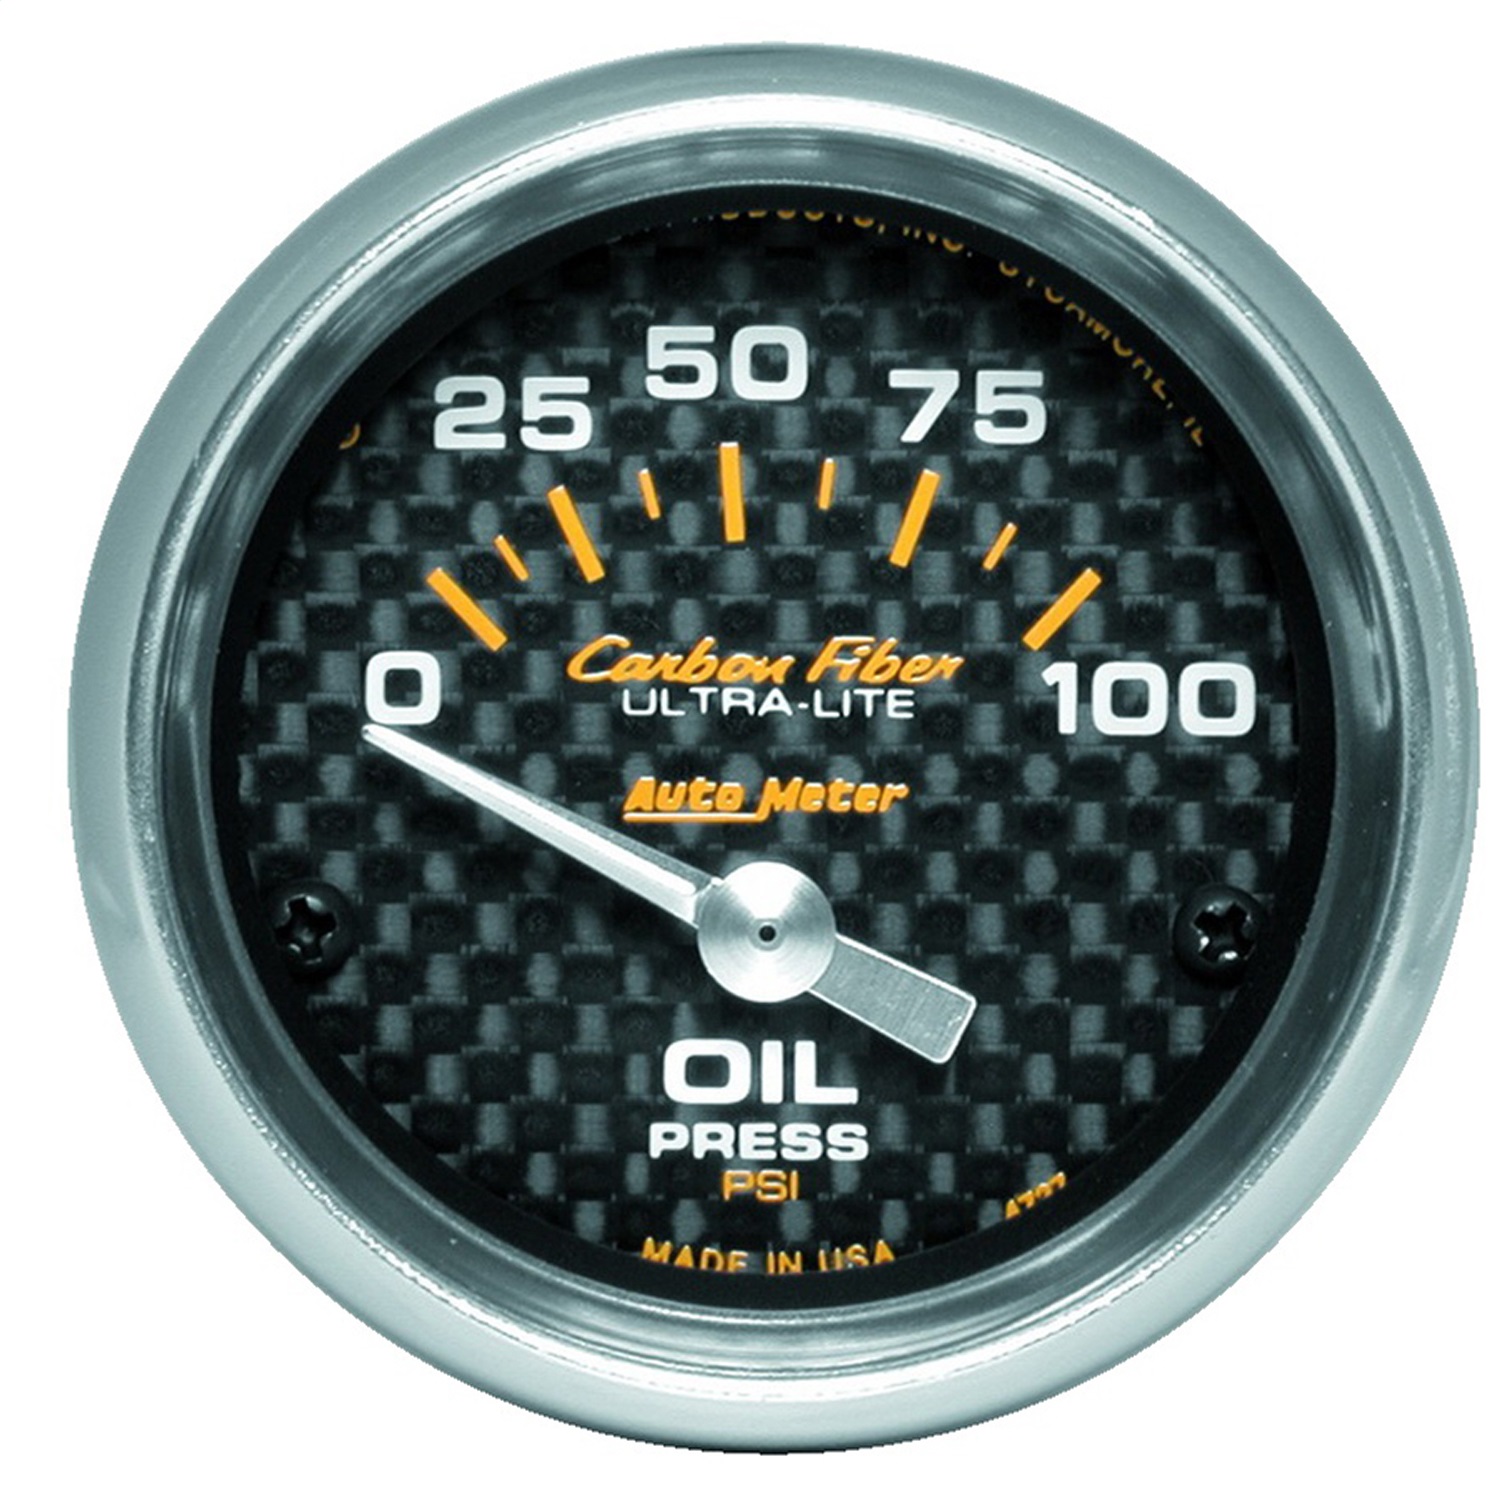 Auto Meter Auto Meter 4727 Carbon Fiber; Electric Oil Pressure Gauge